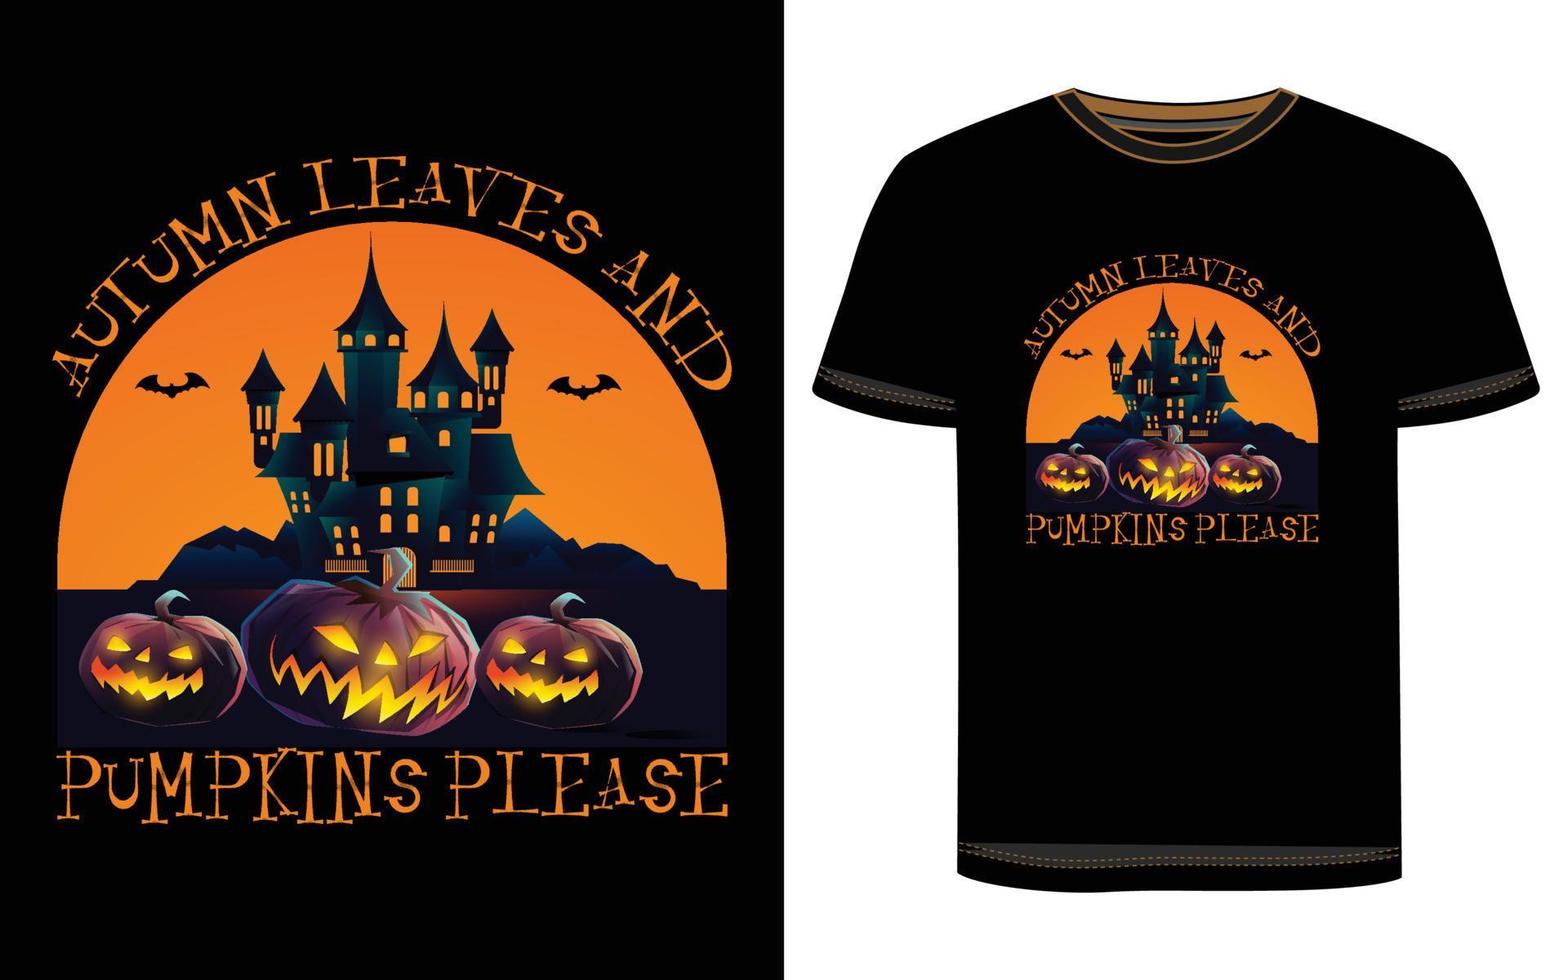 halloween t -shirt design vektor